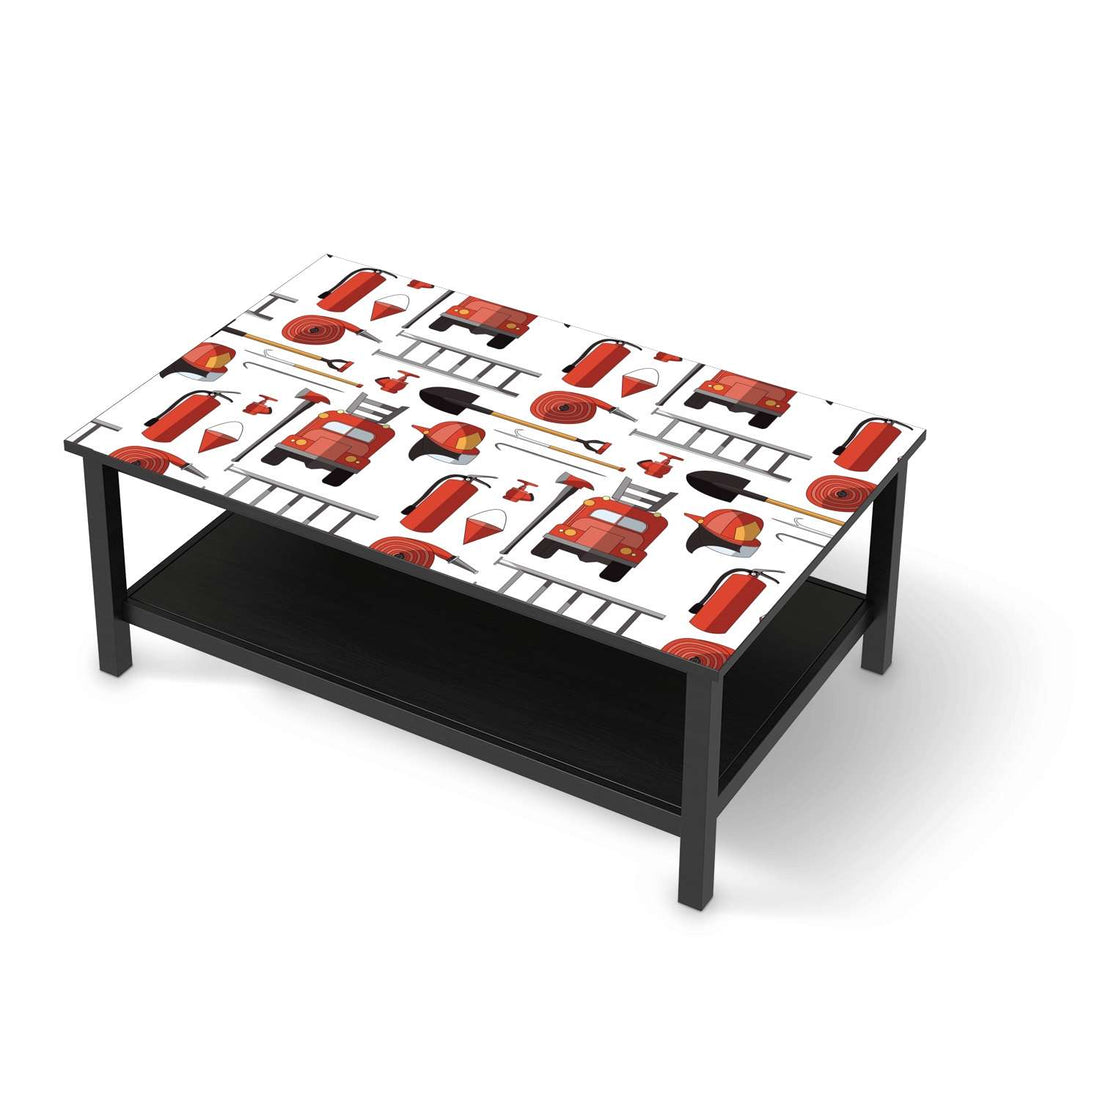 Möbelfolie Firefighter - IKEA Hemnes Couchtisch 118x75 cm - schwarz